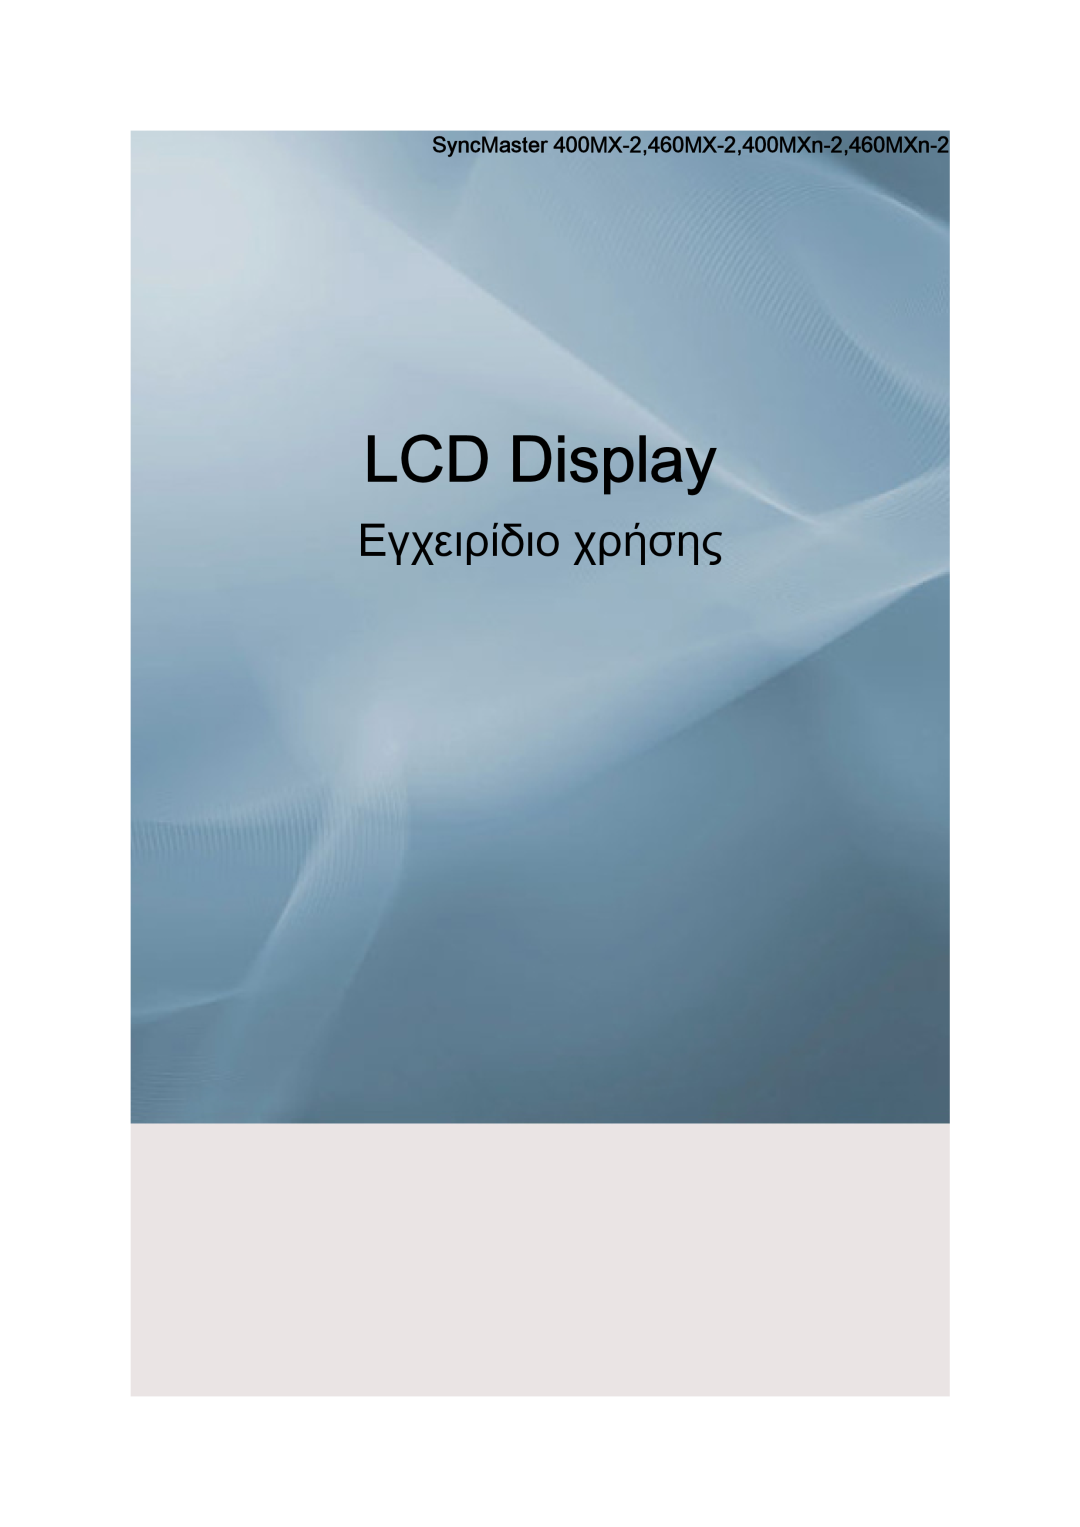 Samsung LH46MGUMBC/EN, LH40MGUMBC/EN manual SyncMaster 400MX-2,460MX-2,400MXn-2,460MXn-2, LCD Display, User Manual 